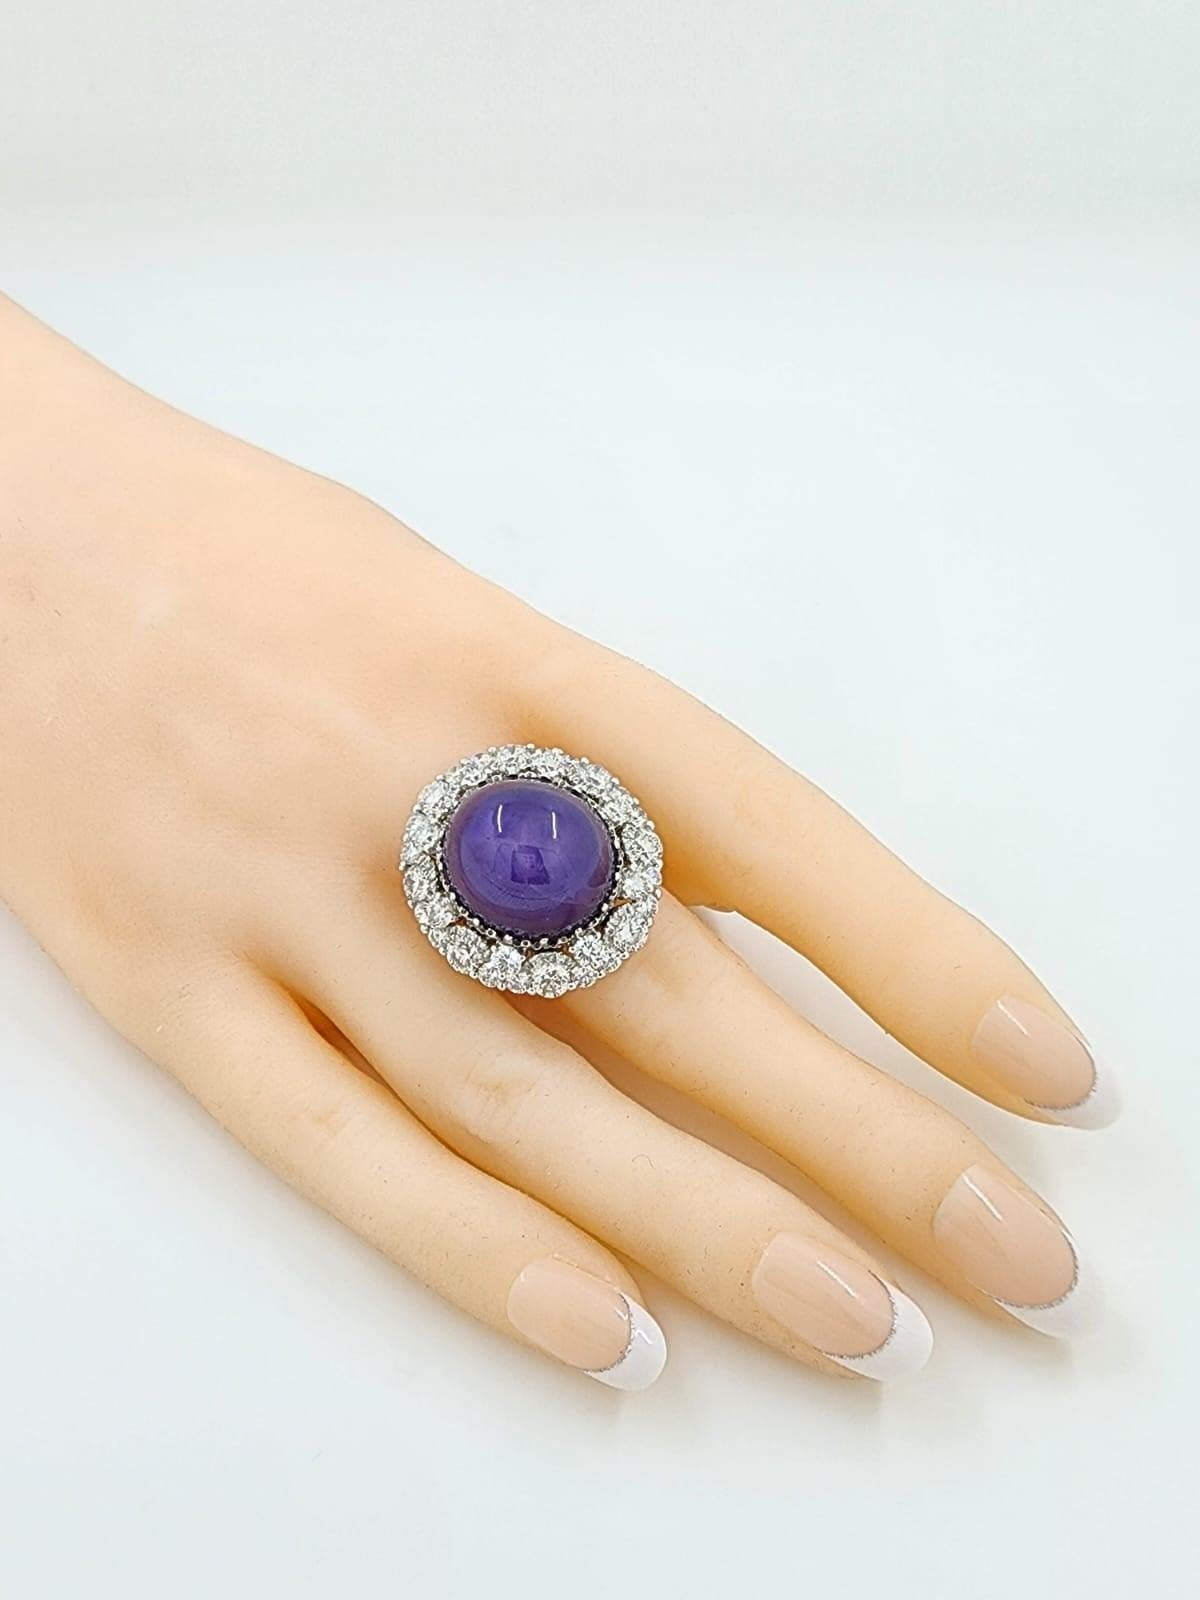 Women's GRS Certified 45.63 Carat Untreated Star Sapphire Diamond Ring